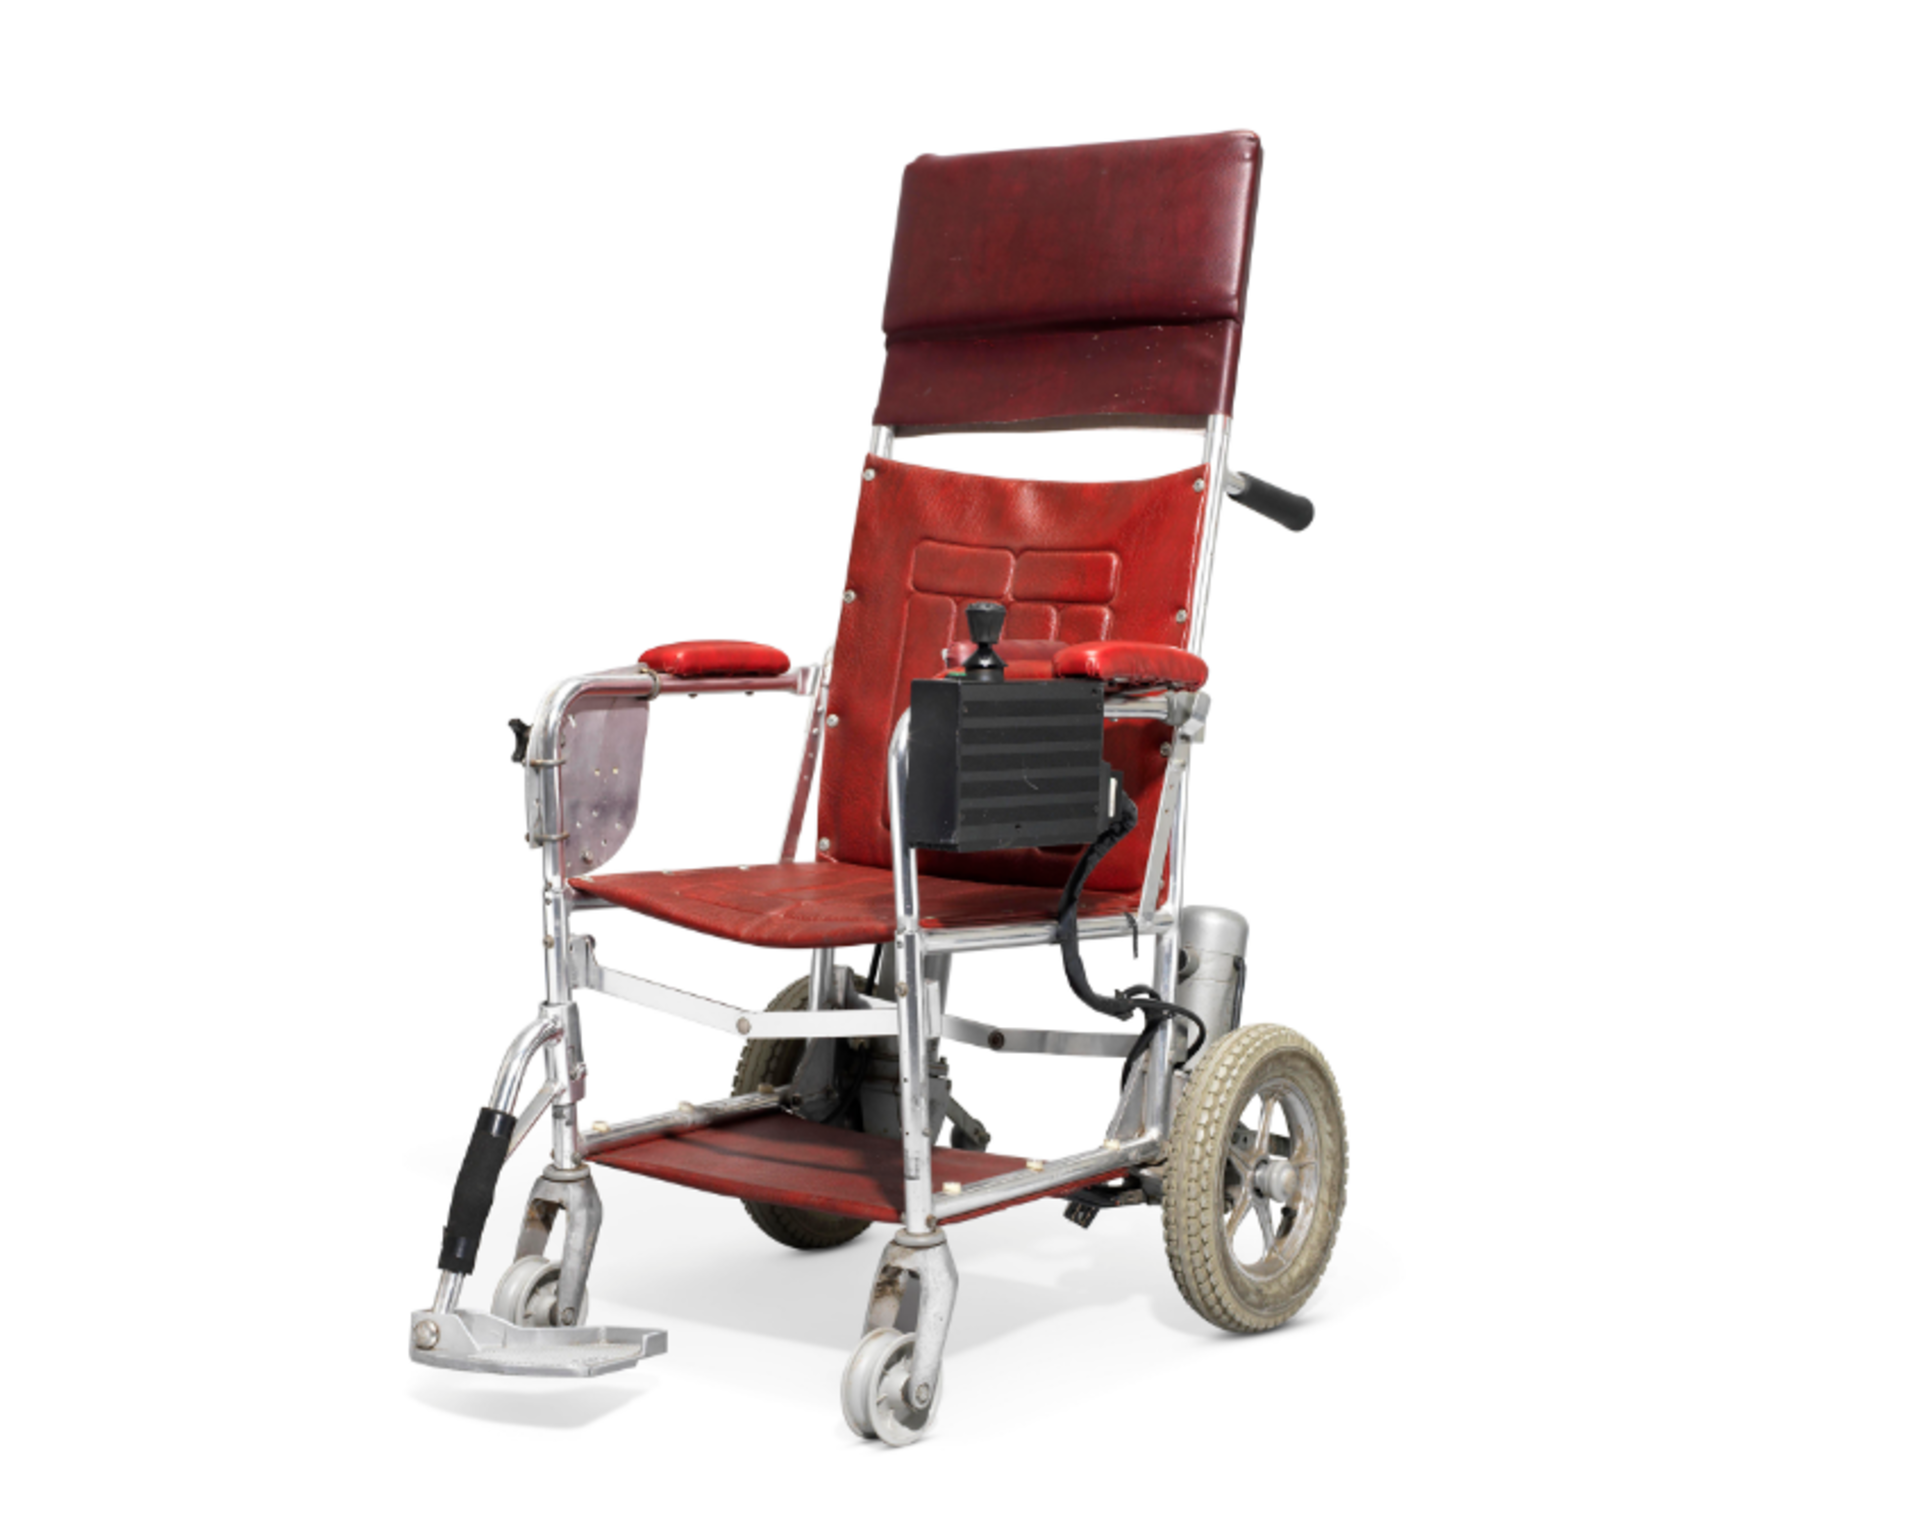 hawking's wheelchair